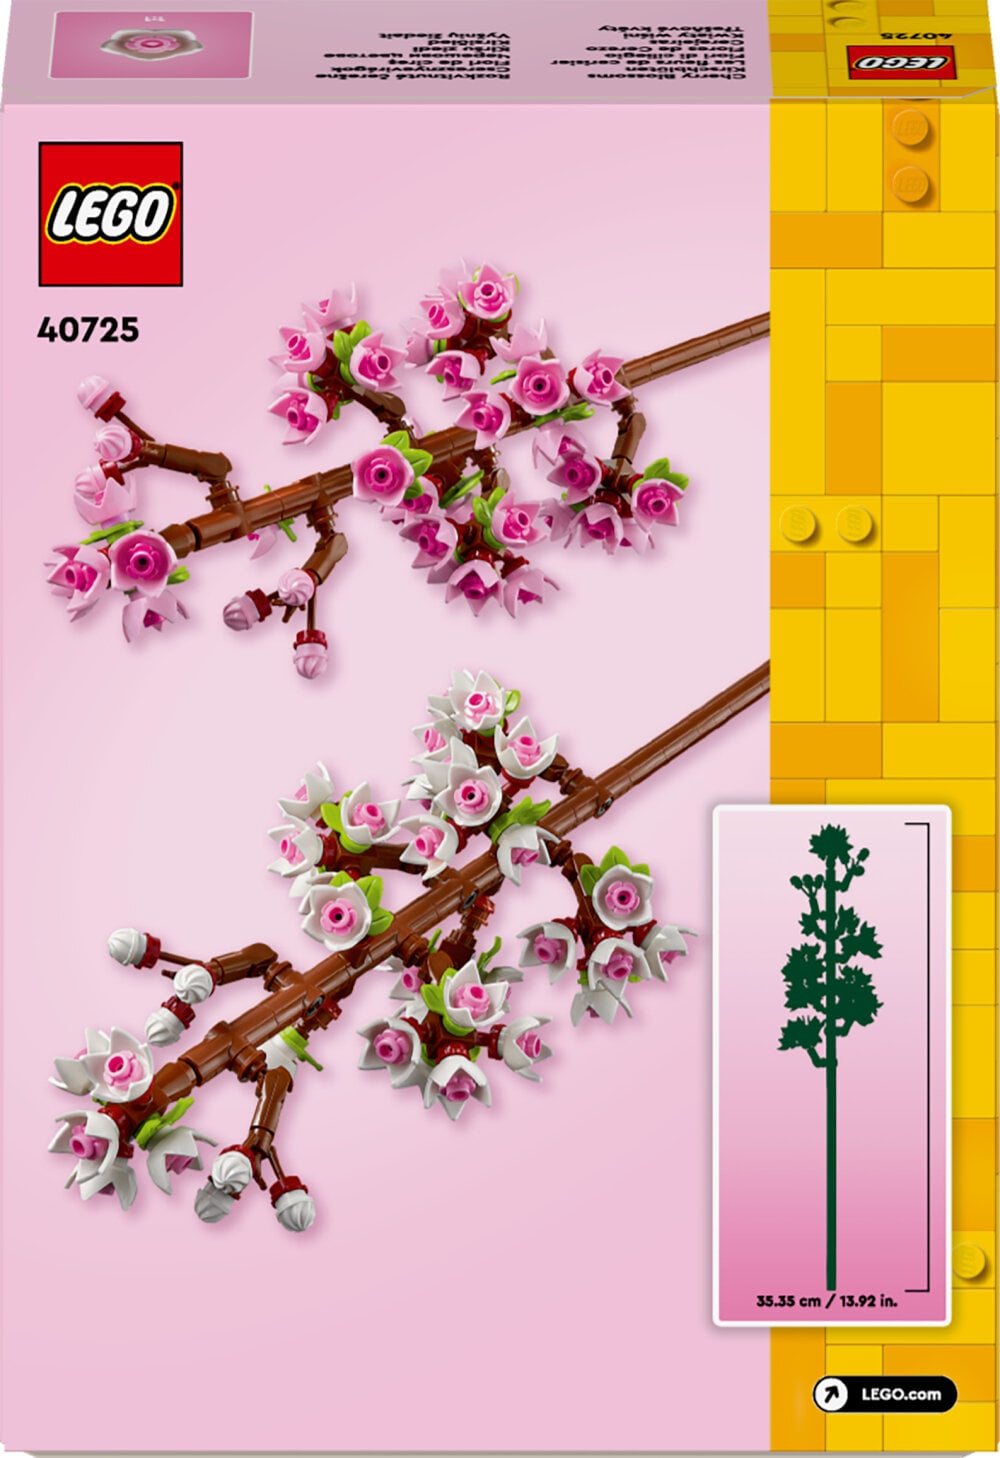 LEGO Botanical Collection - Kirsikankukat 8+